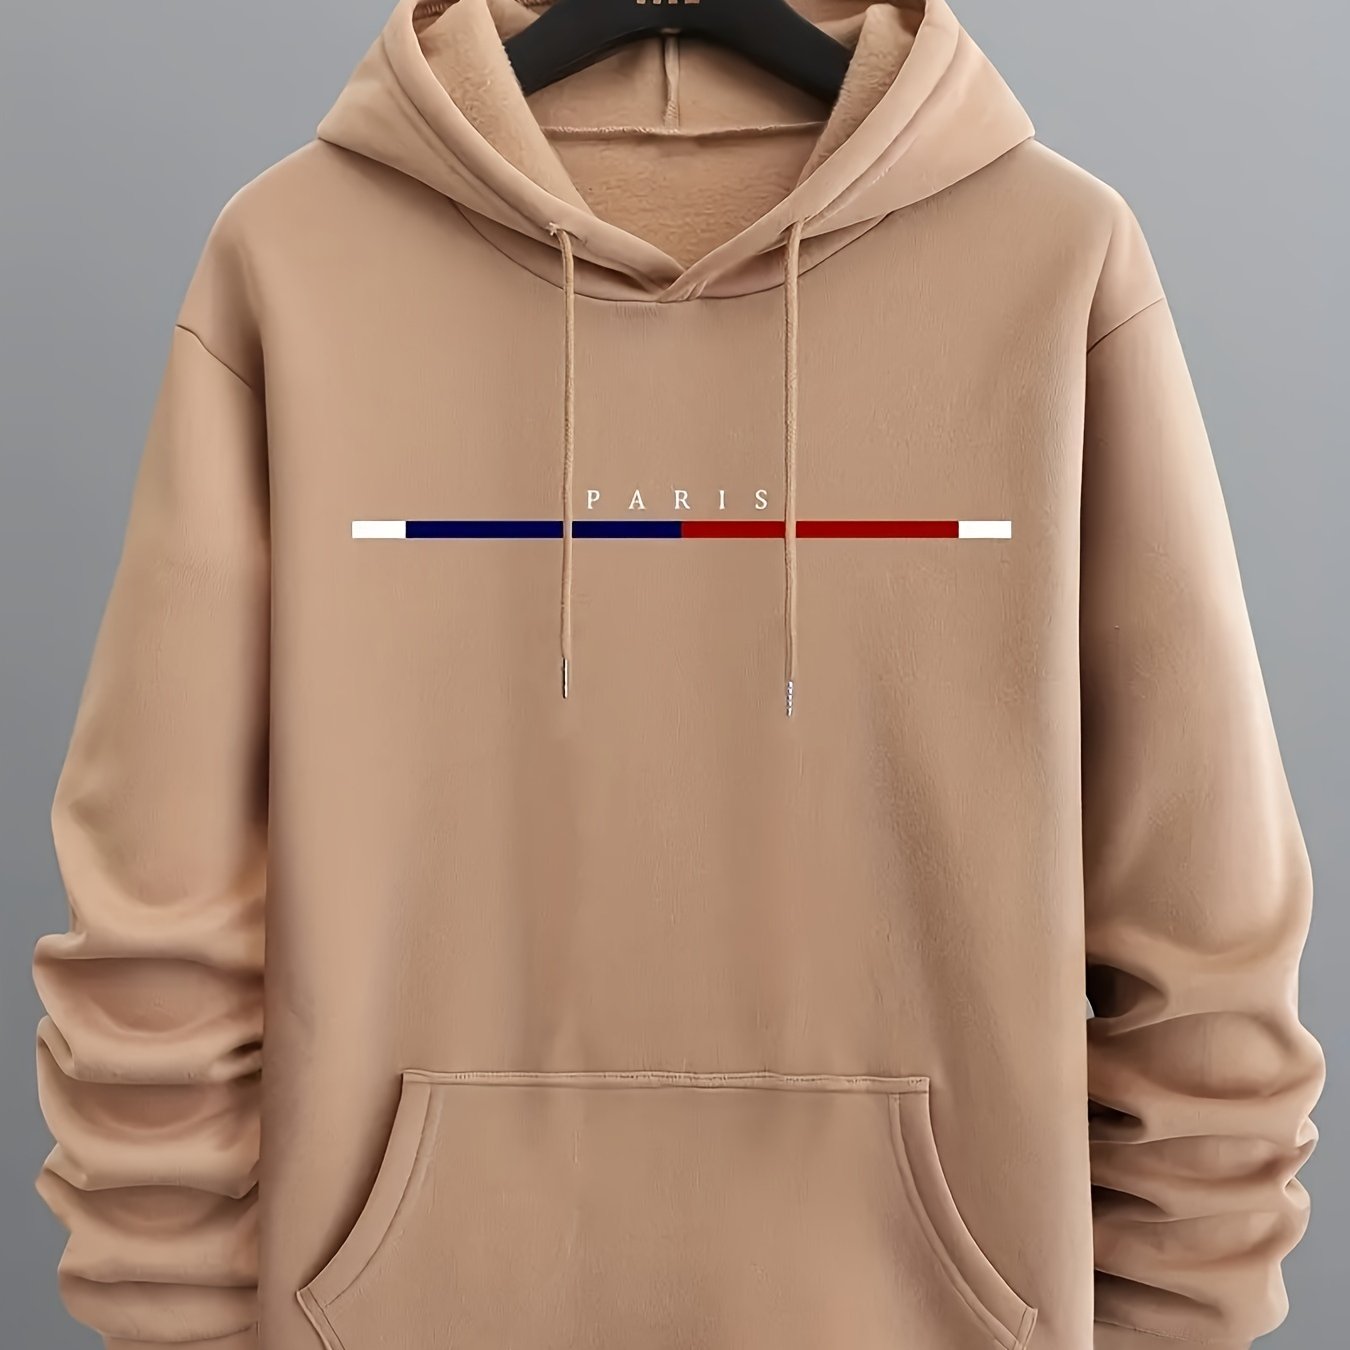 paris print hoodie cool hoodies for men mens casual graphic design pullover hooded sweatshirt with kangaroo pocket streetwear for winter fall as gifts black